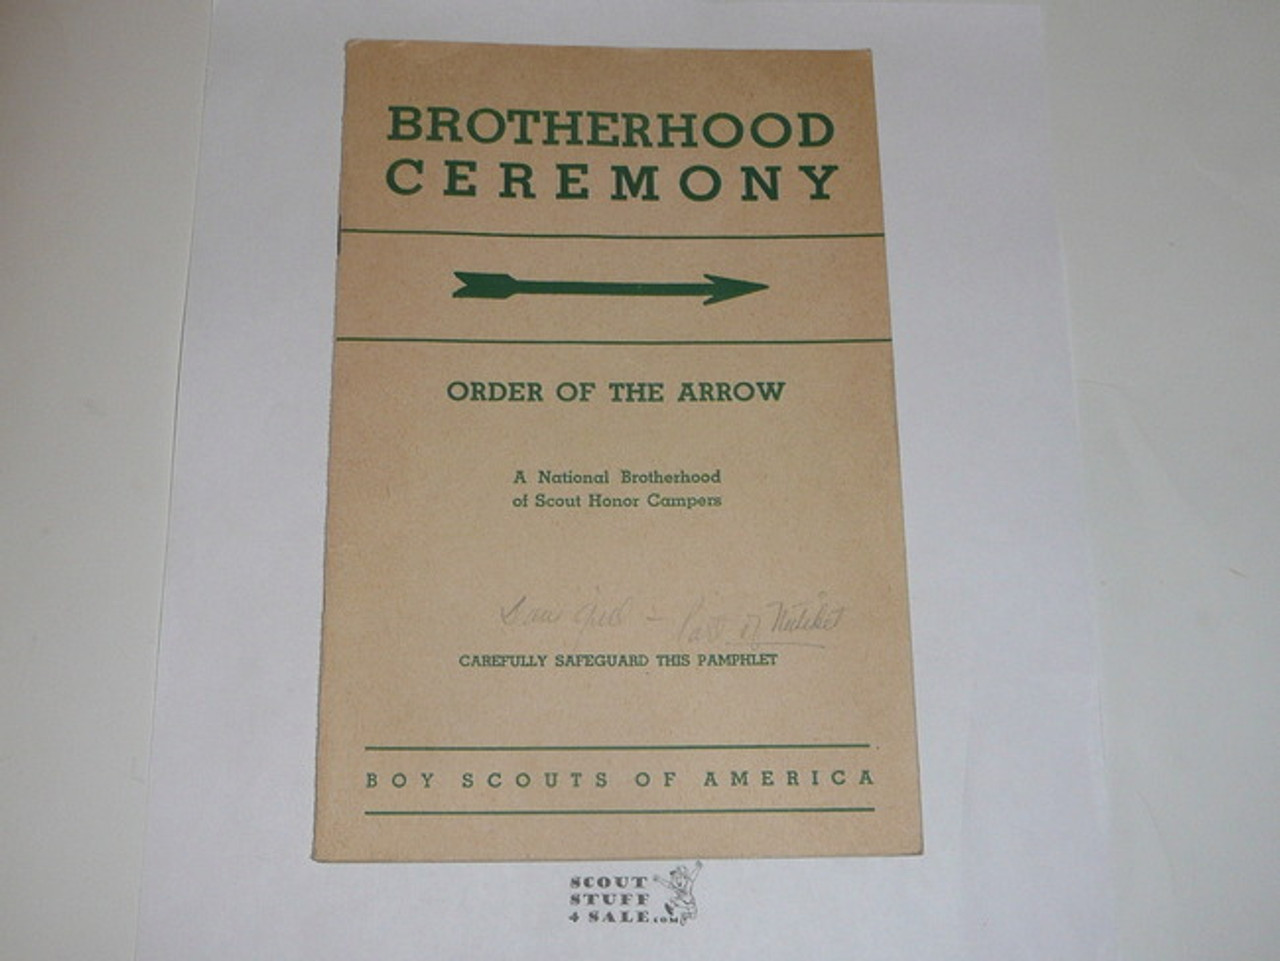 Brotherhood Ceremony Manual, Order of the Arrow, 1953, 3-53 Printing